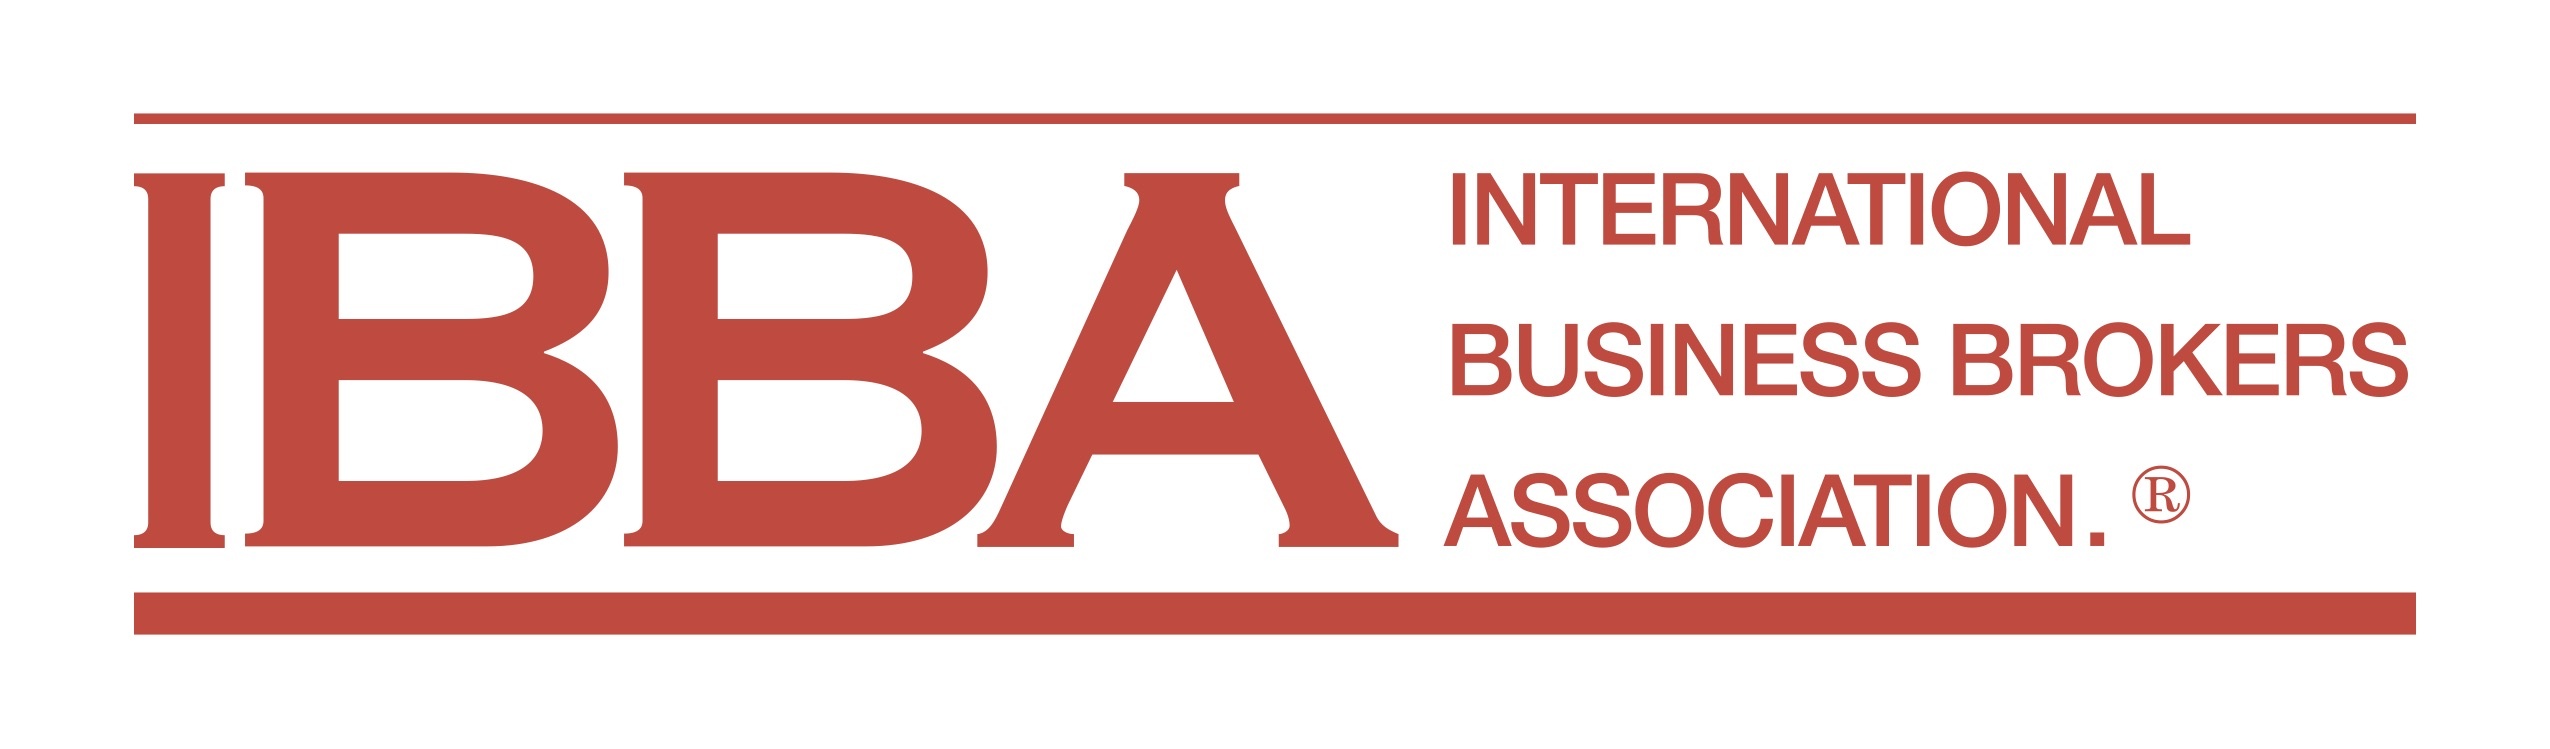 International Business Brokers Association (IBBA) Membership Badge